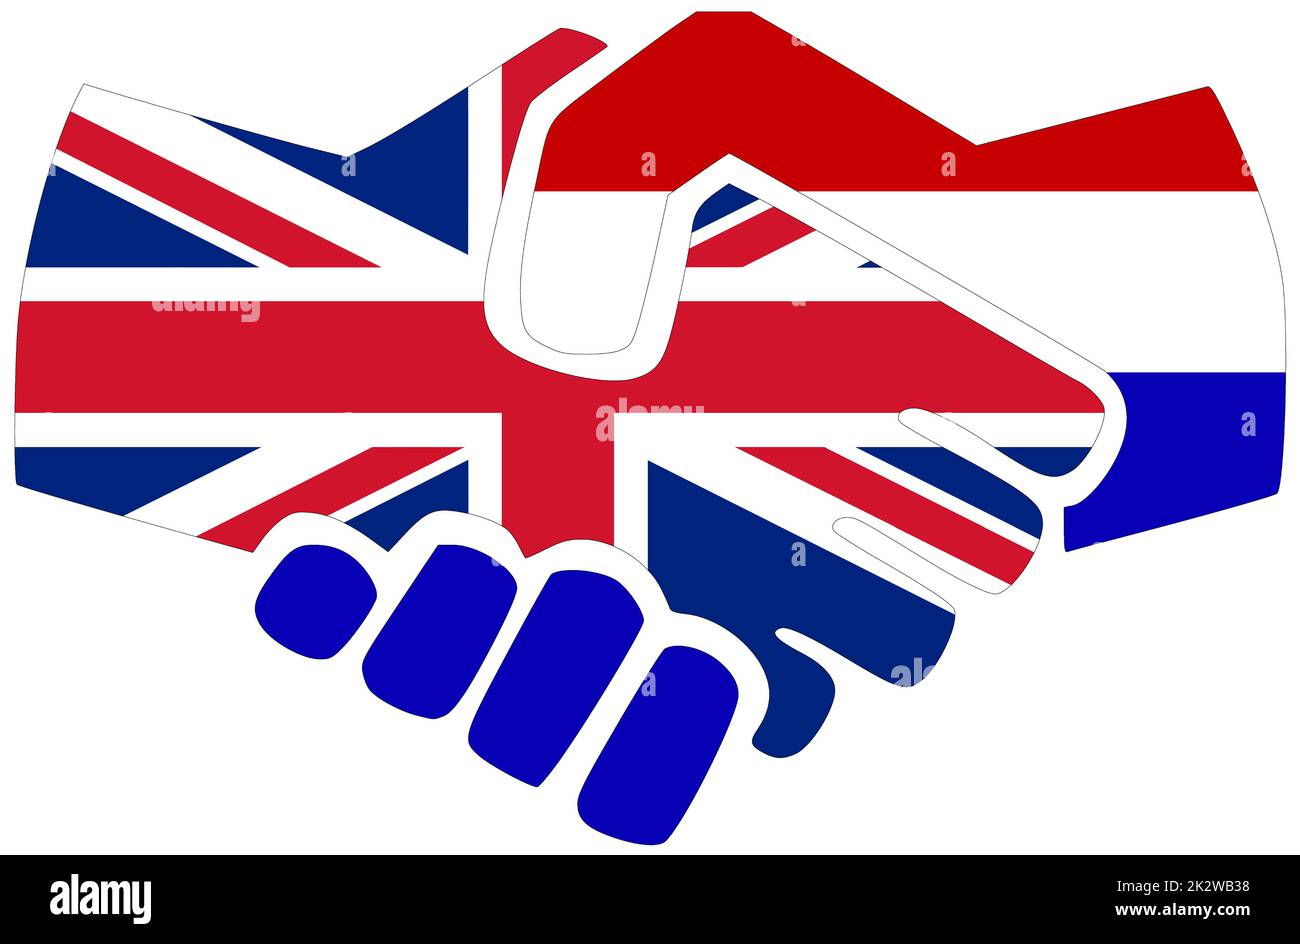 UK - Netherlands : Handshake, symbol of agreement or friendship Stock Photo